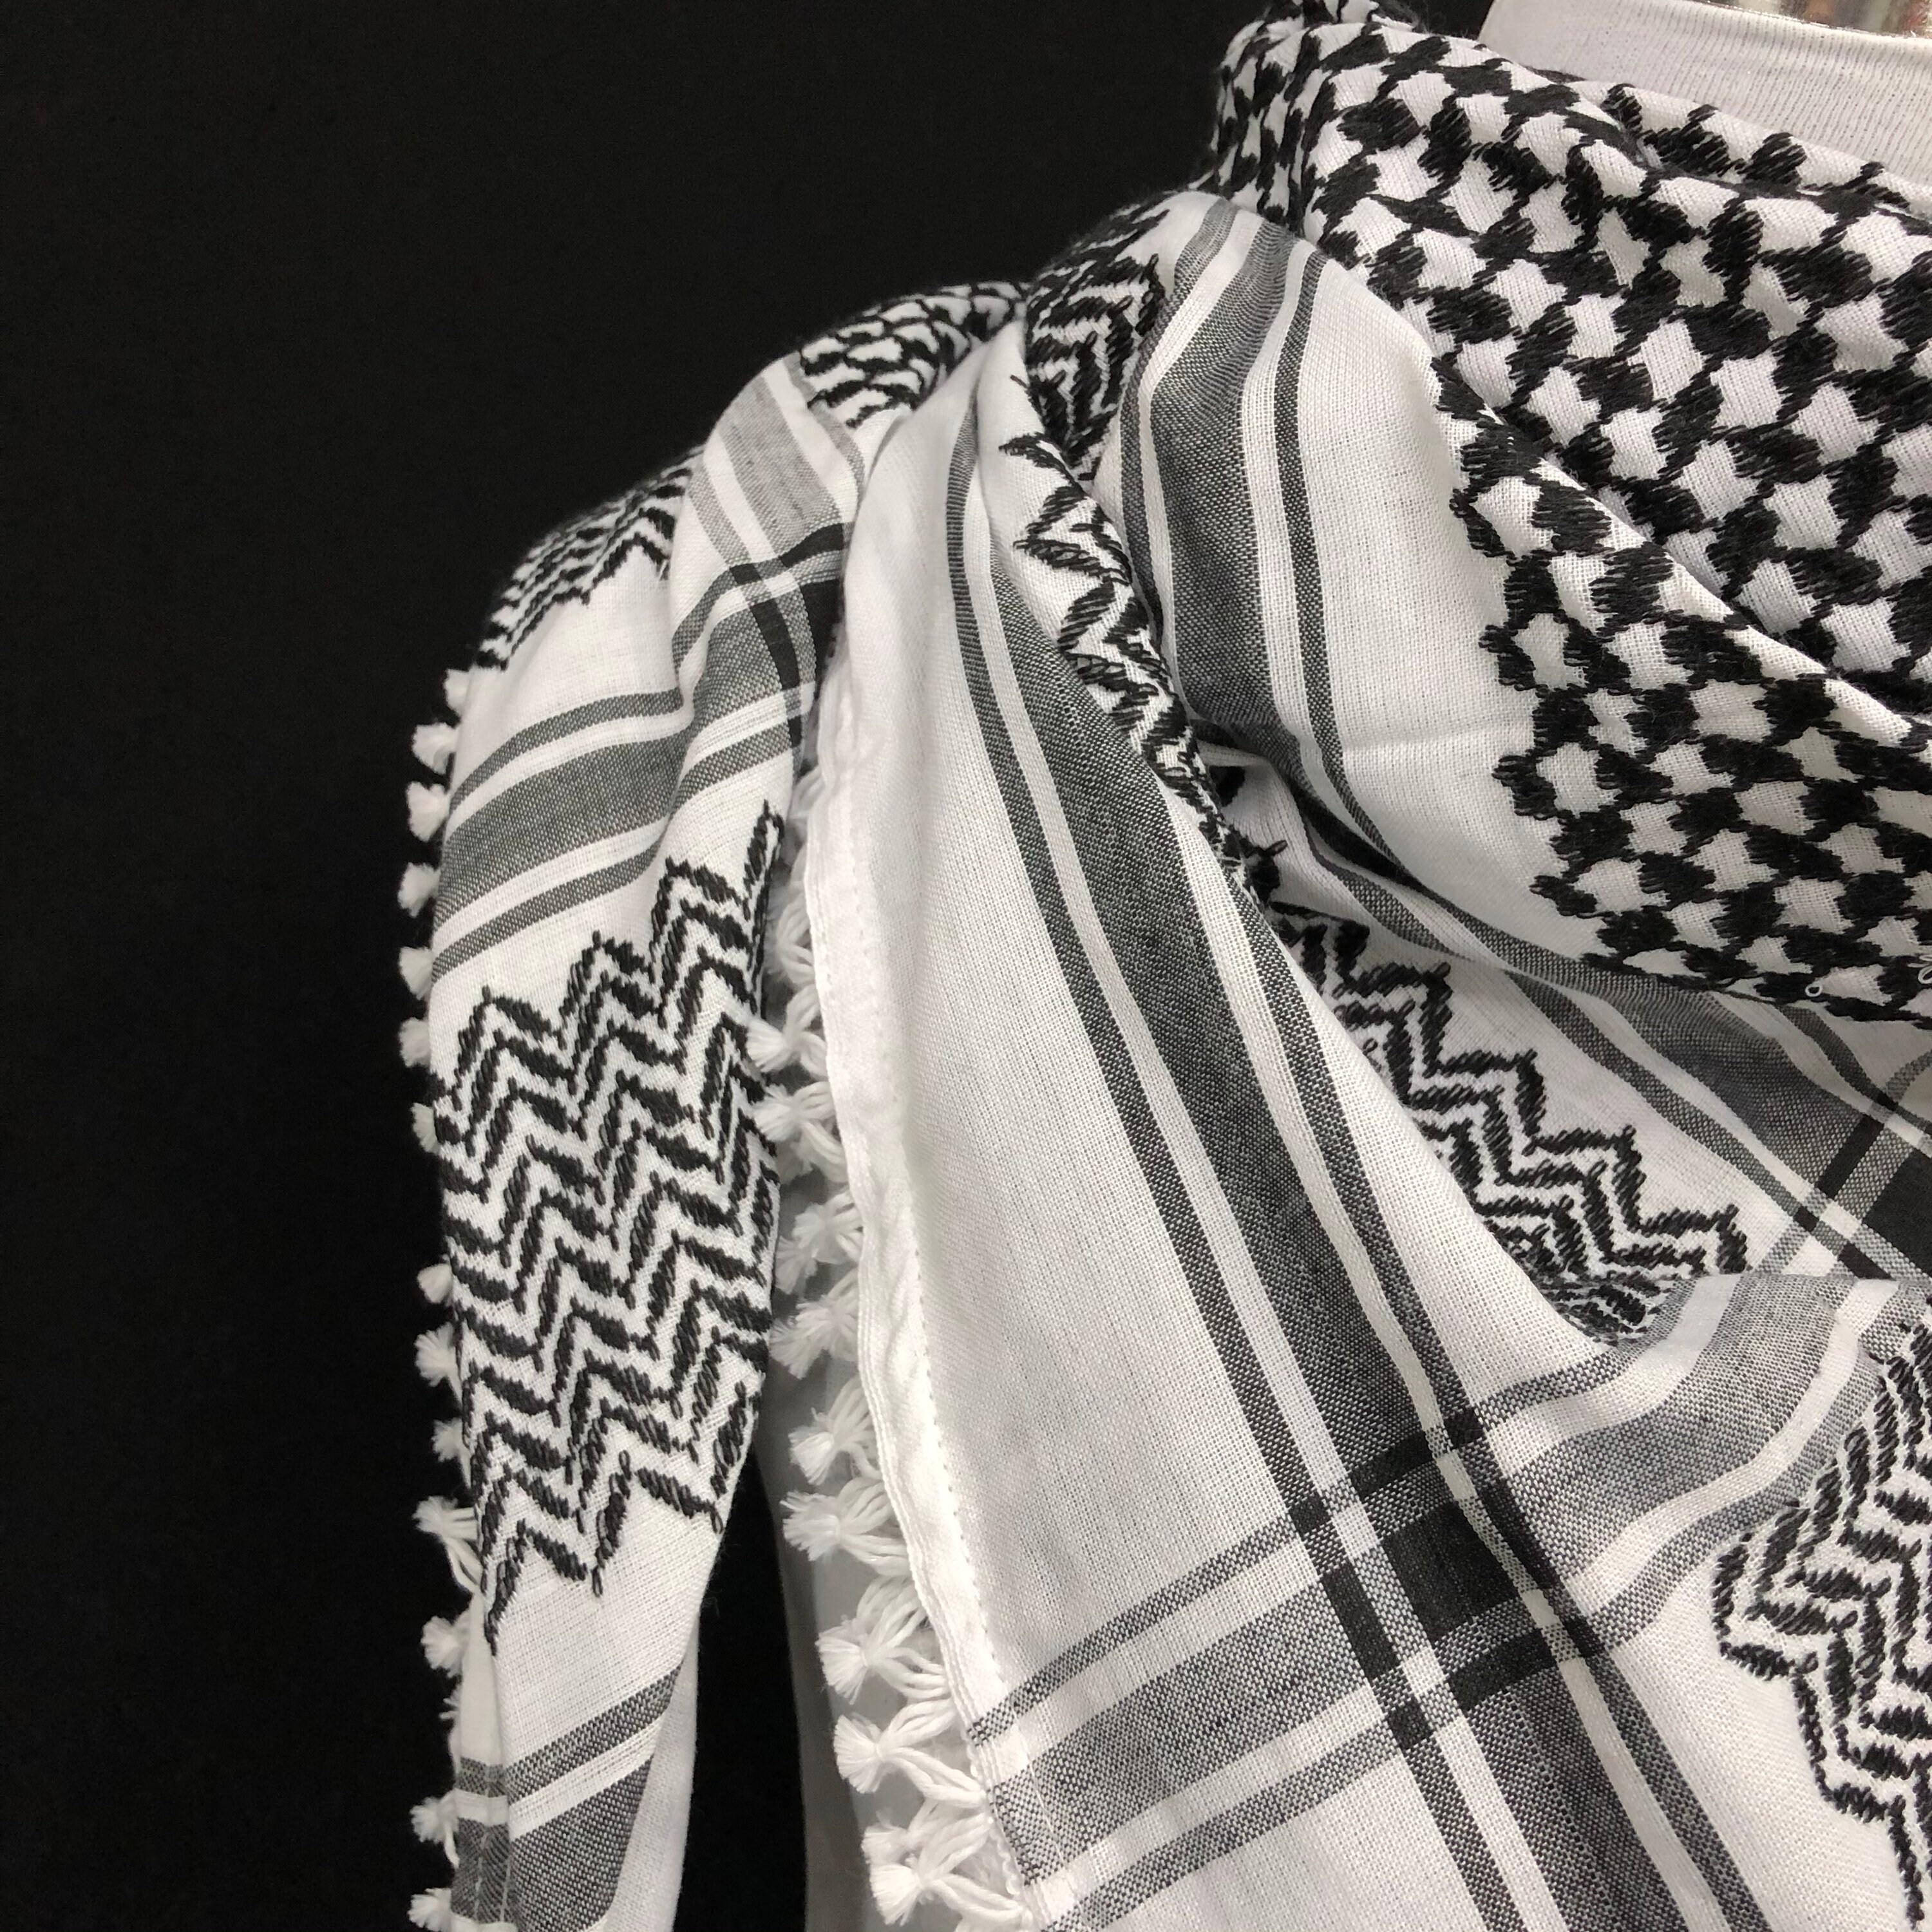 Hatta 2020 sale Details about   ORIGINAL Hirbawi Palestine Keffiyeh Shemagh Arab Scarf Cotton 